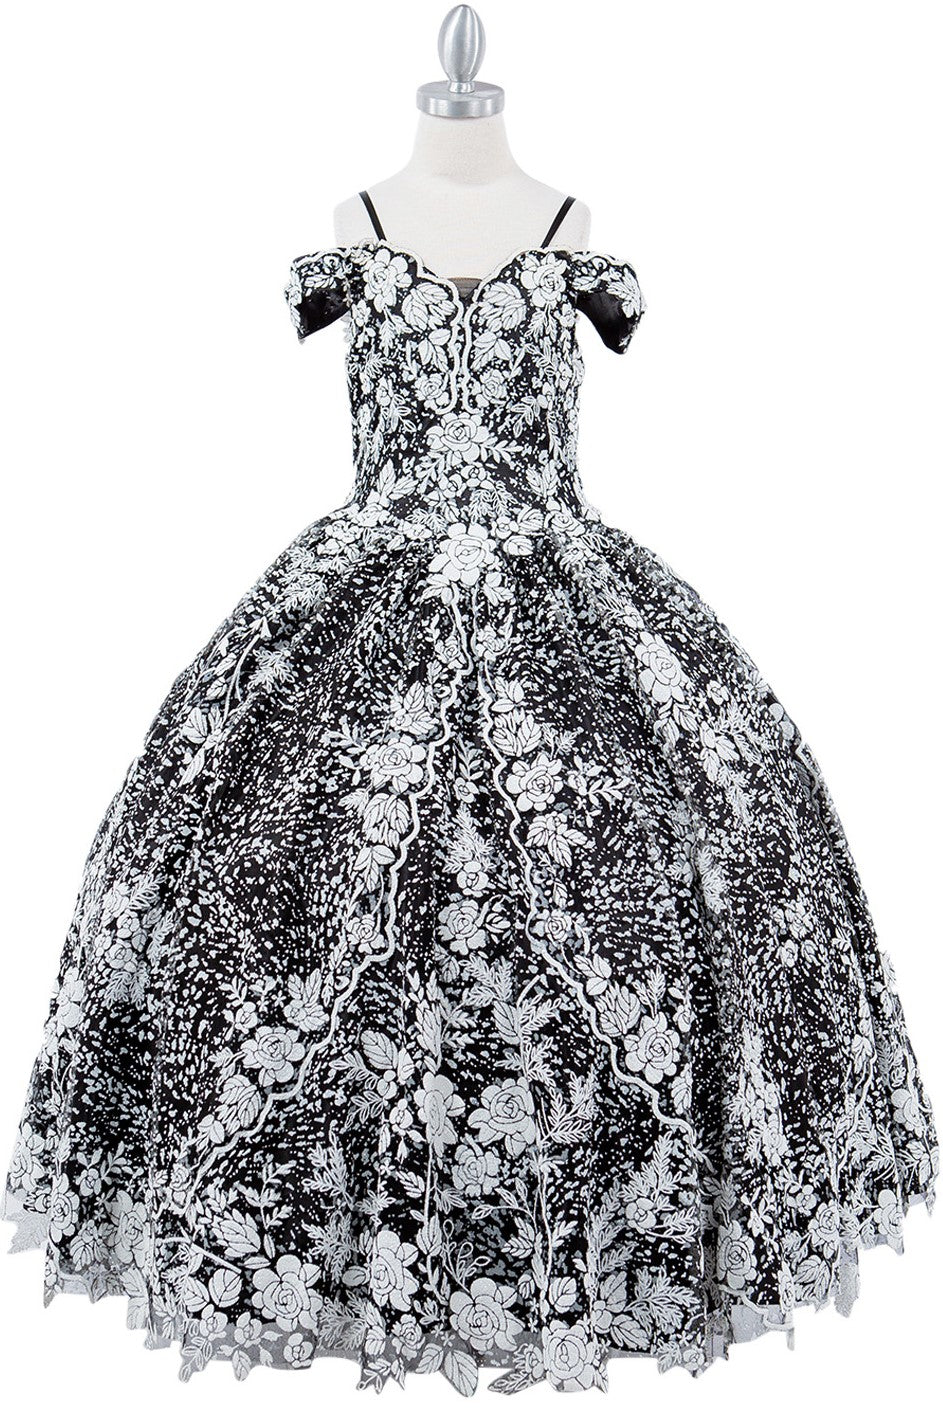 Cinderella Couture USA AS8070 Glitter Tulle Mini Quince